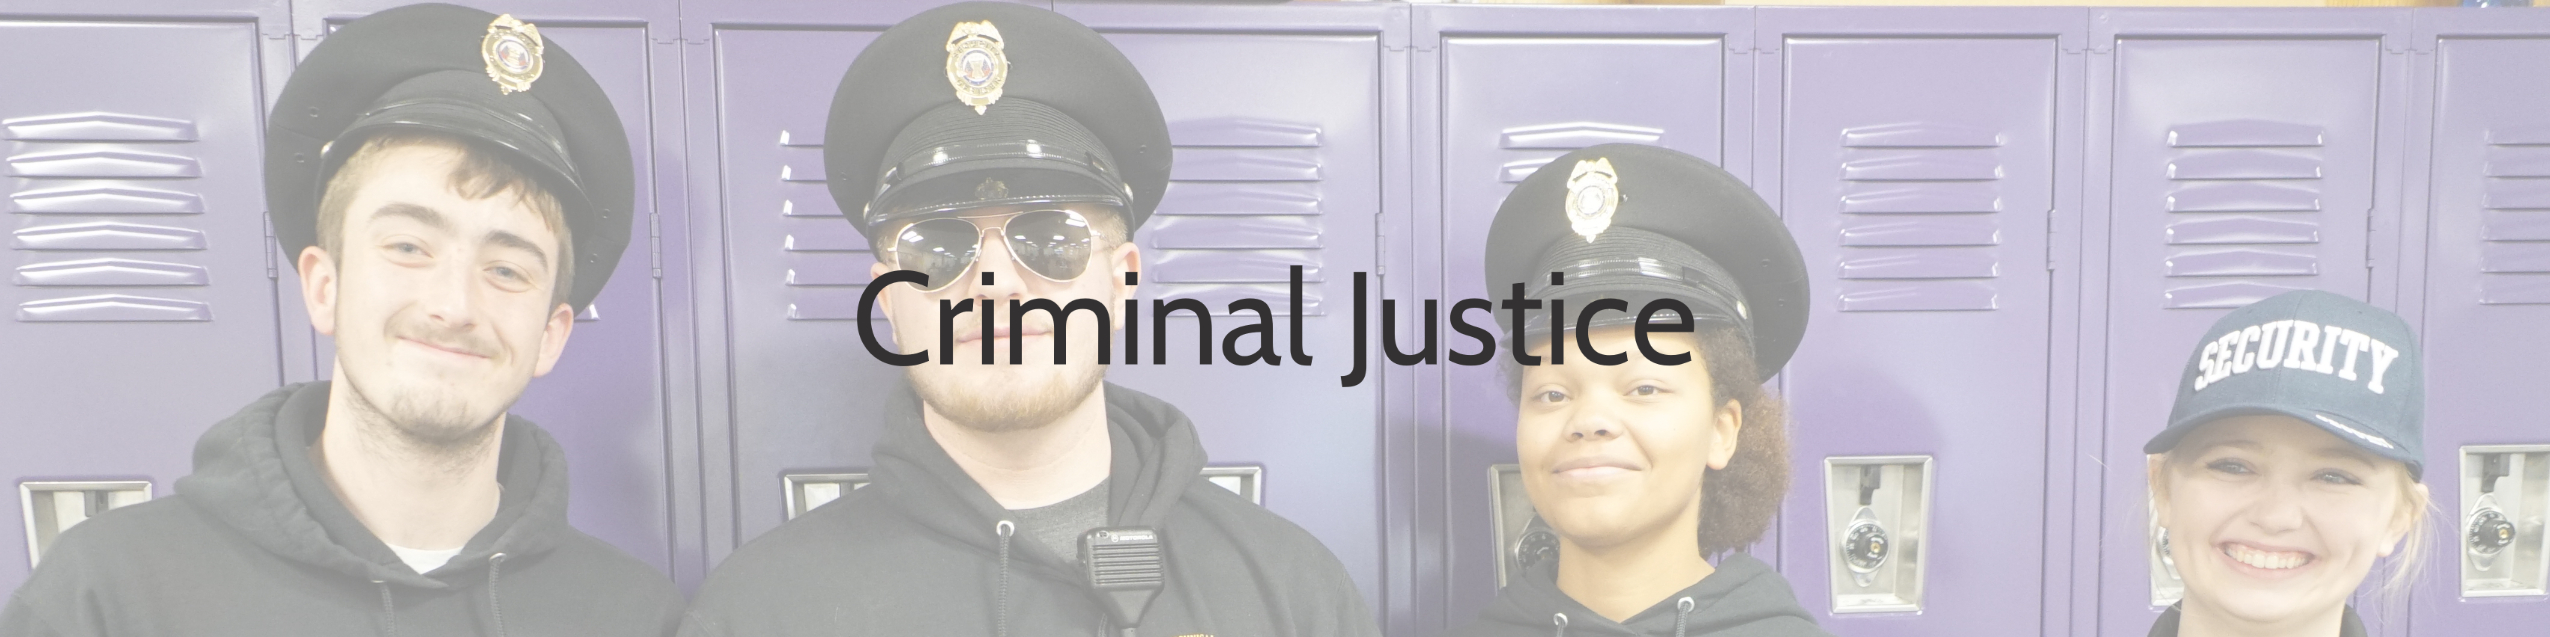 criminal justice 